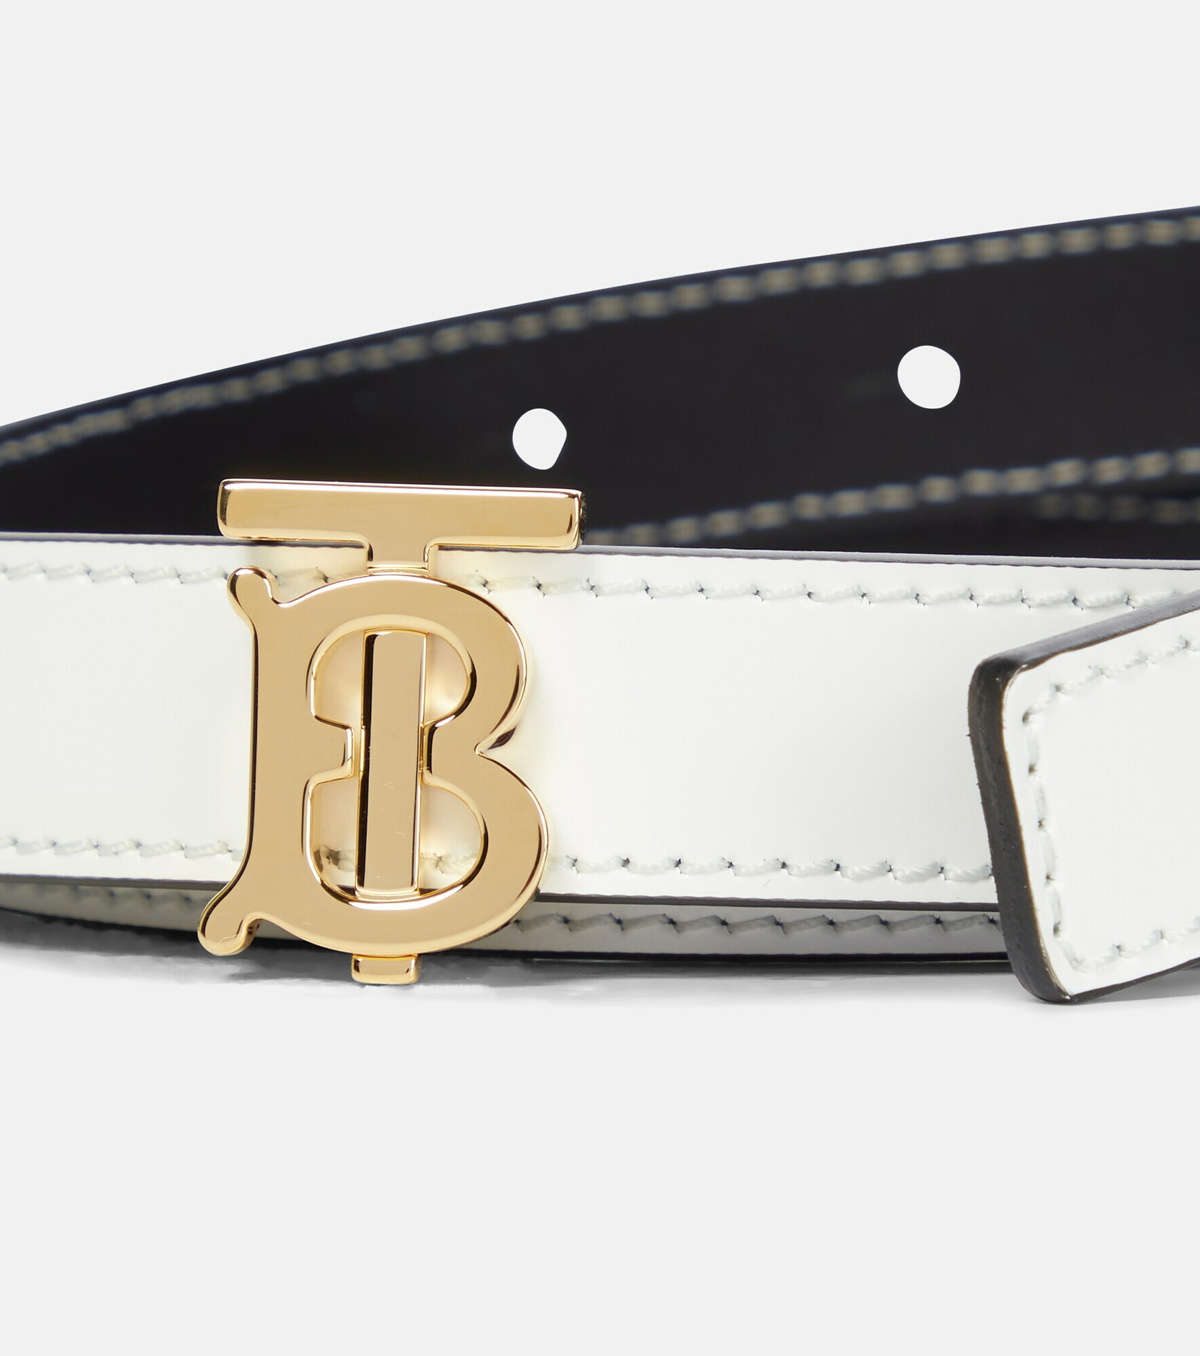 Burberry - Tb-buckle Leather Belt - Mens - Black Multi